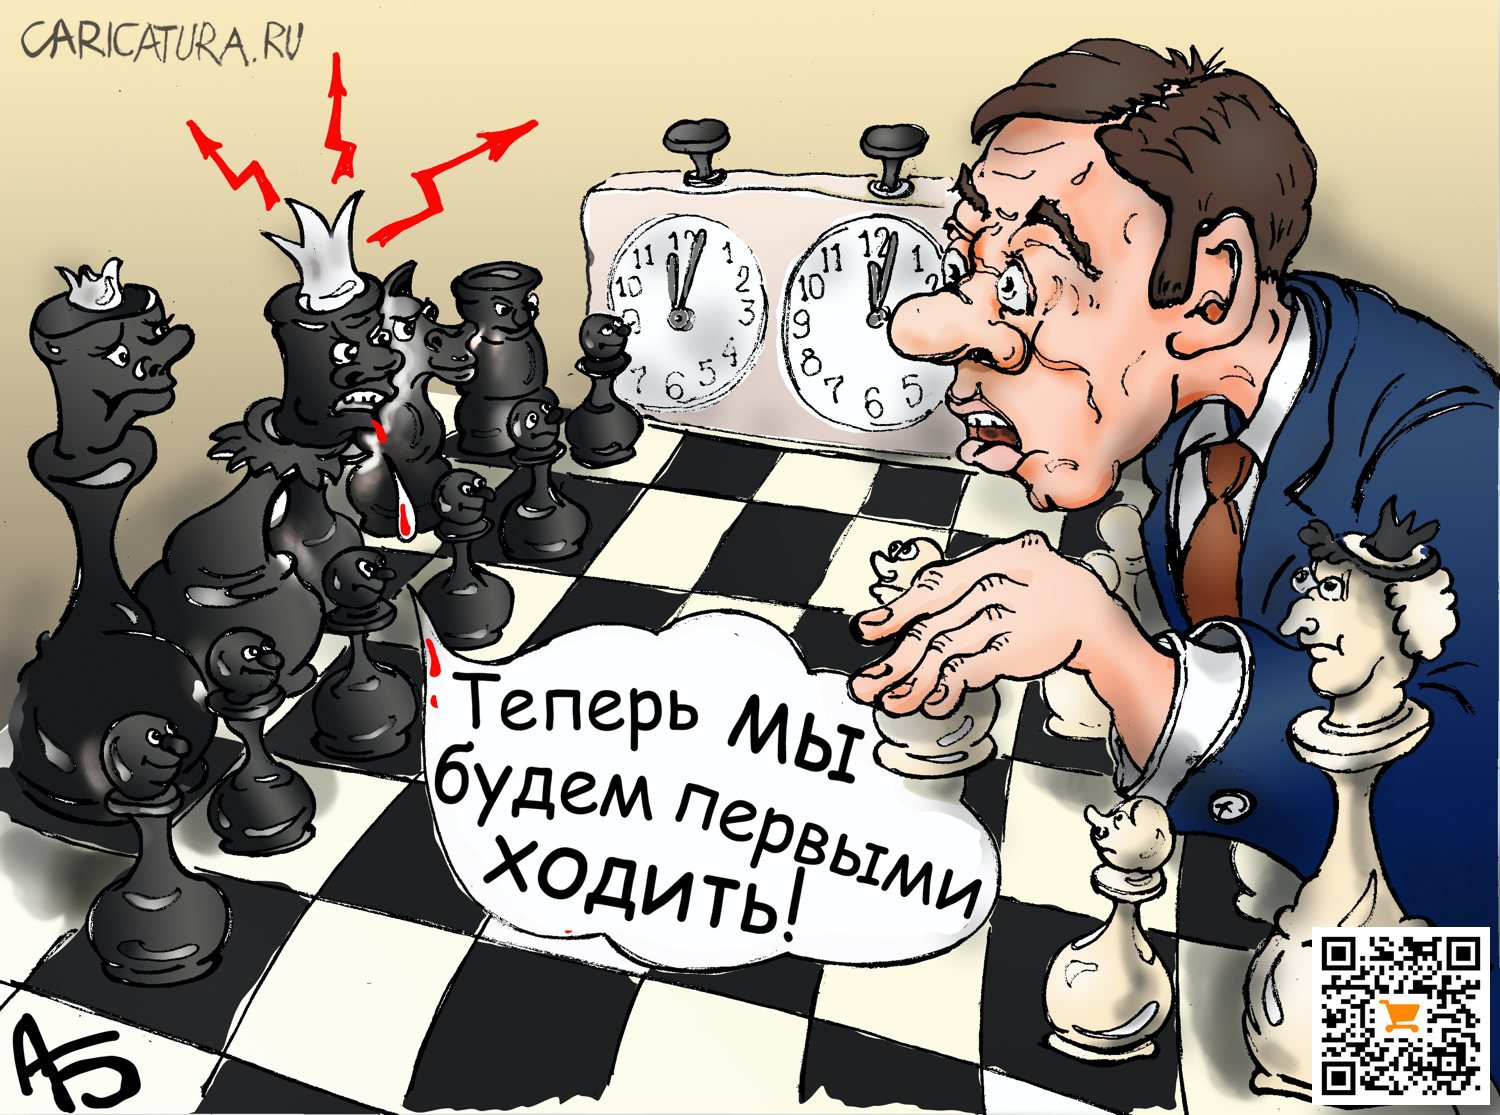 Карикатура "По новым правилам", Александр Богданов